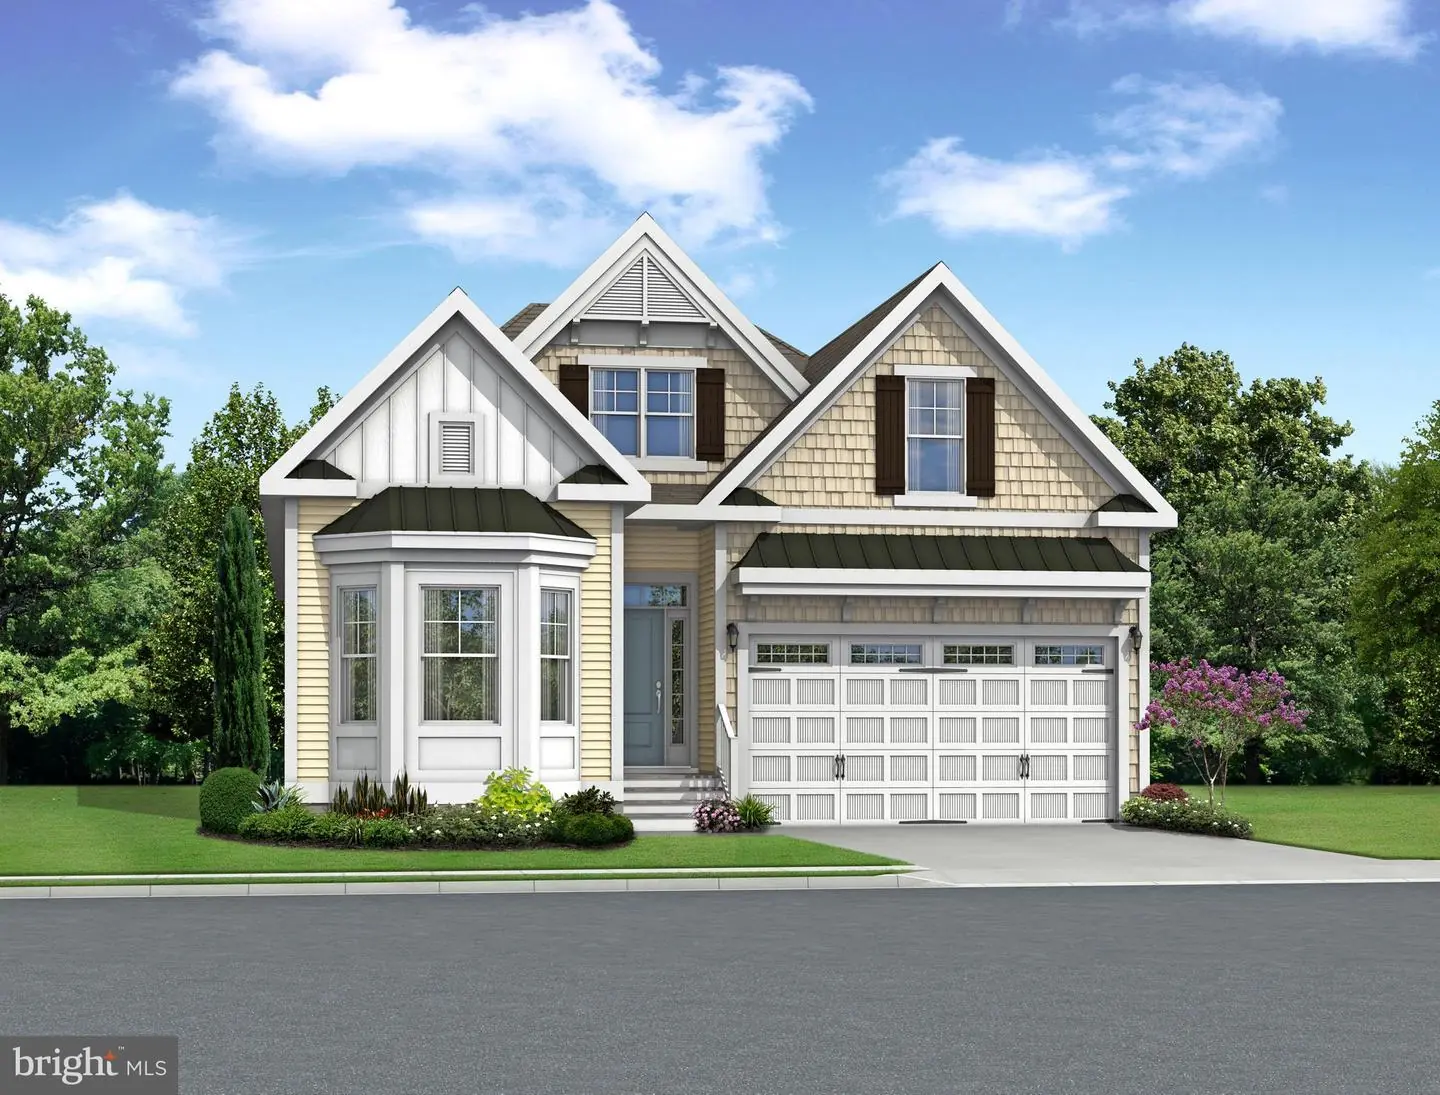 DESU2031076-801956180408-2024-01-30-16-56-07 Bluebell To-be-built Home Tbd | Millsboro, DE Real Estate For Sale | MLS# Desu2031076  - David T. King Realtor